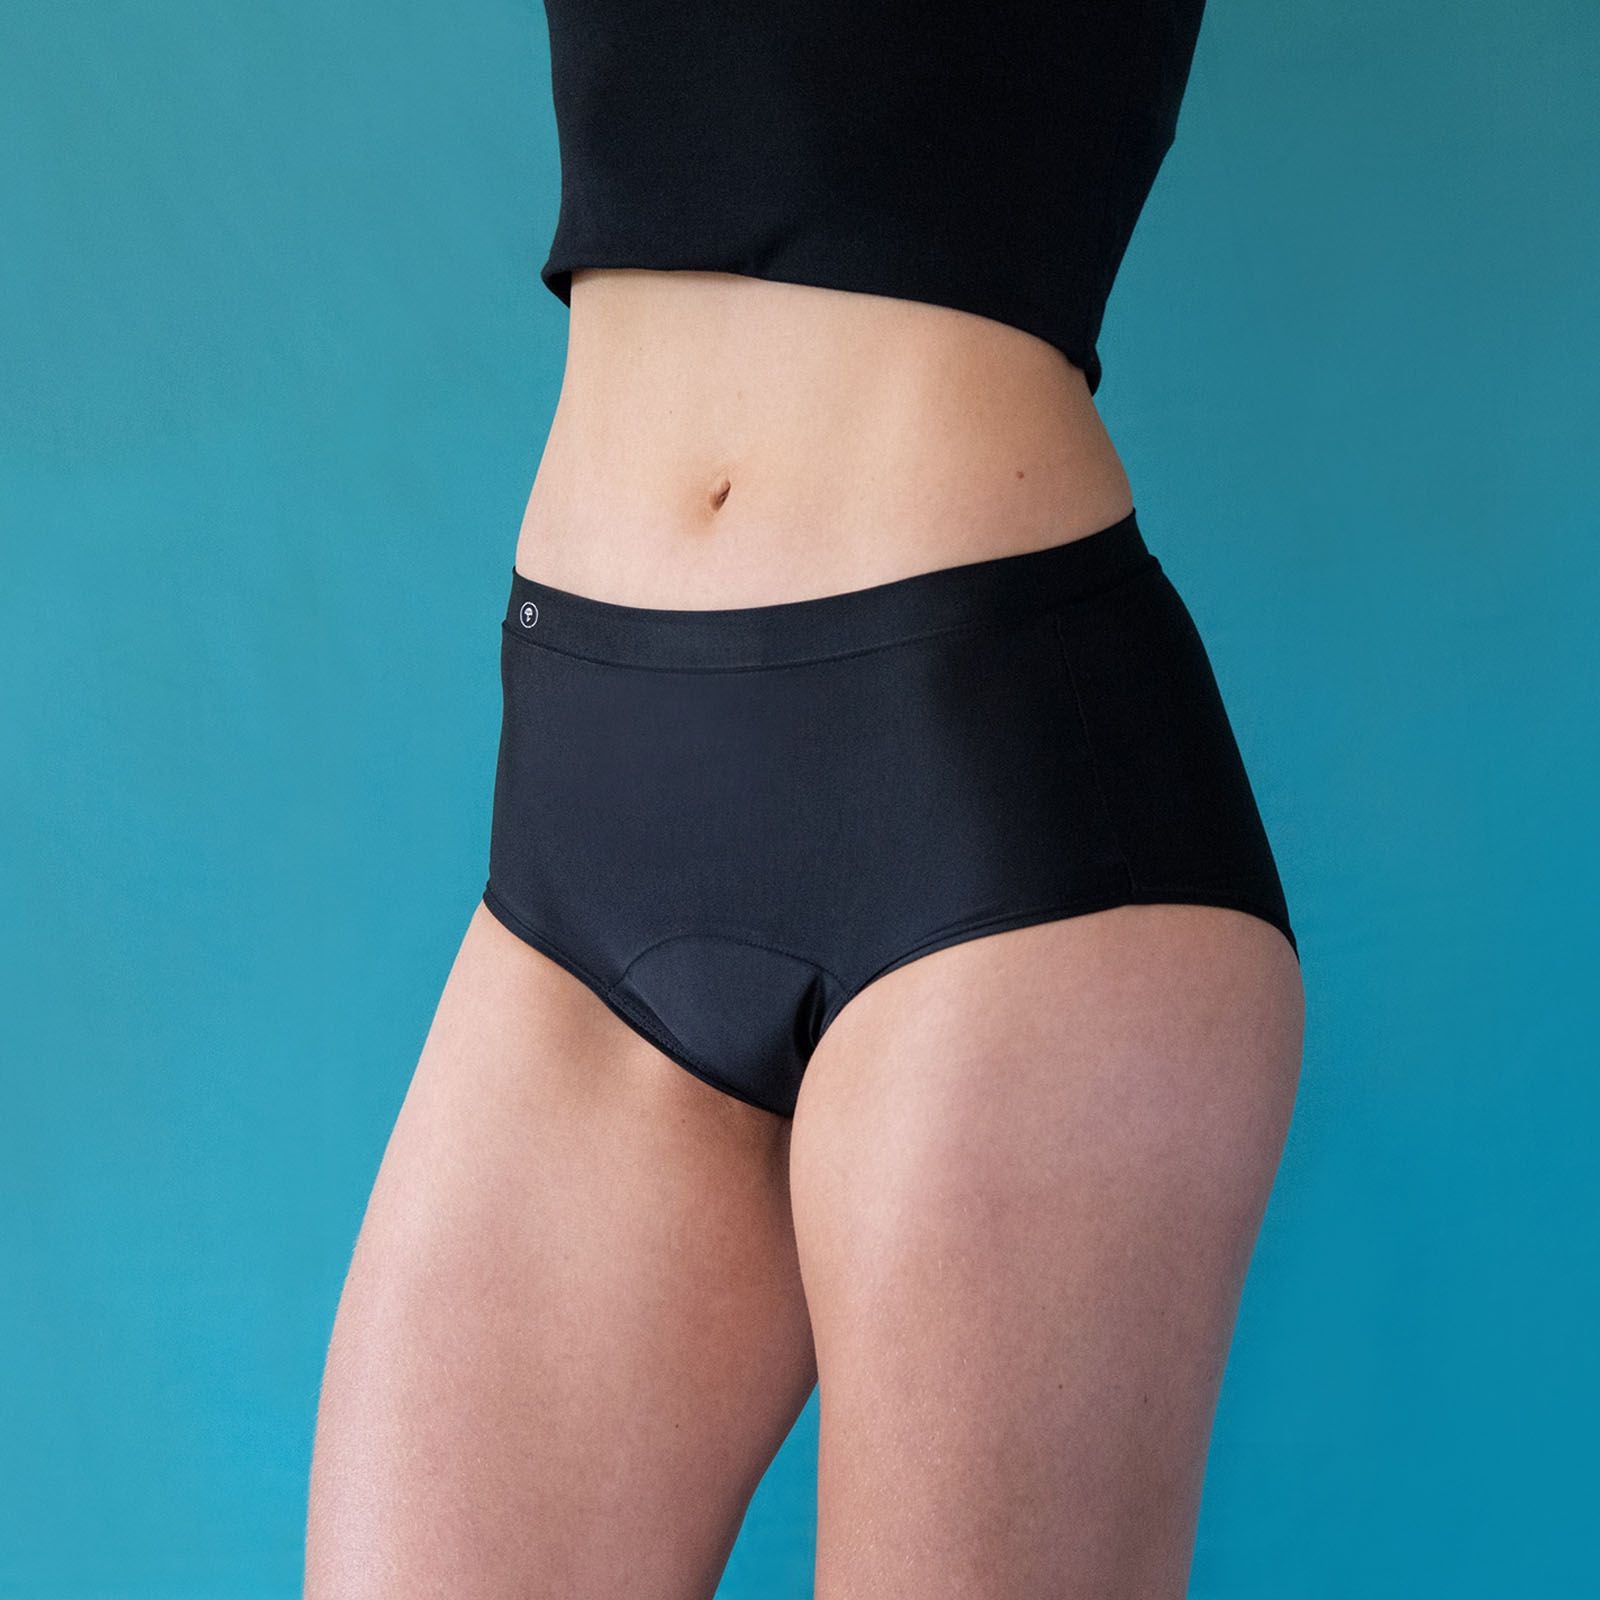  KPBMKE Period Underwear for Women Heavy Flow High Absorbent  Leak Proof Washable Incontinence Underwear 3 Pack XS Black : Health &  Household